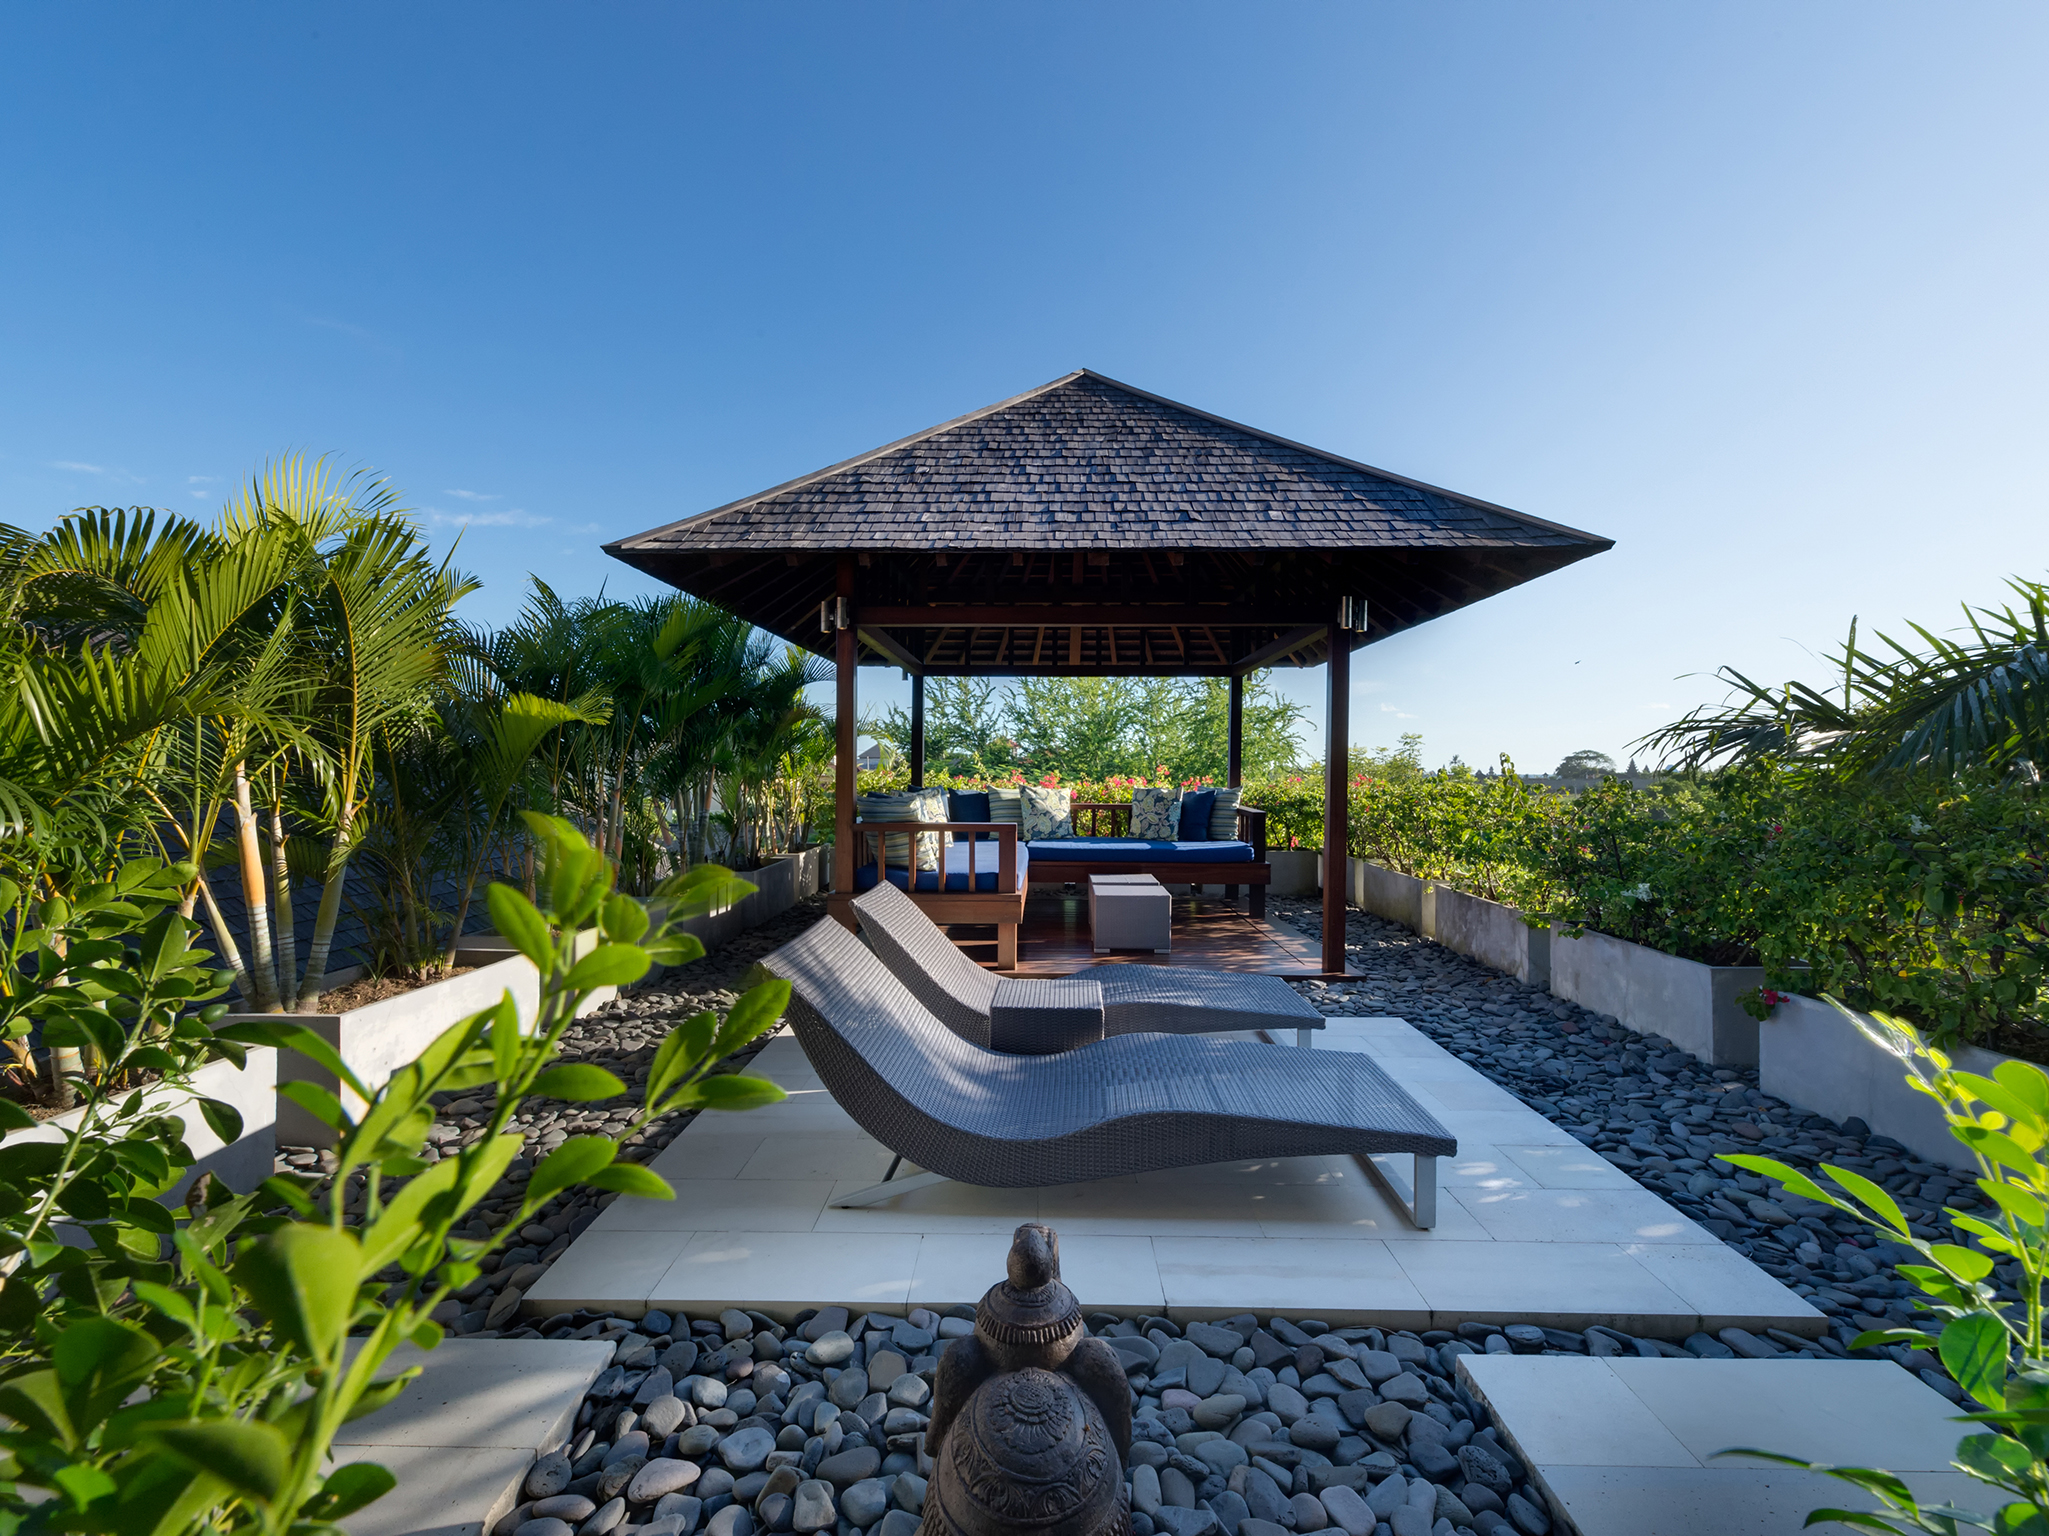 Bendega Rato - Roof deck sunbathing - Bendega Rato, Canggu, Bali